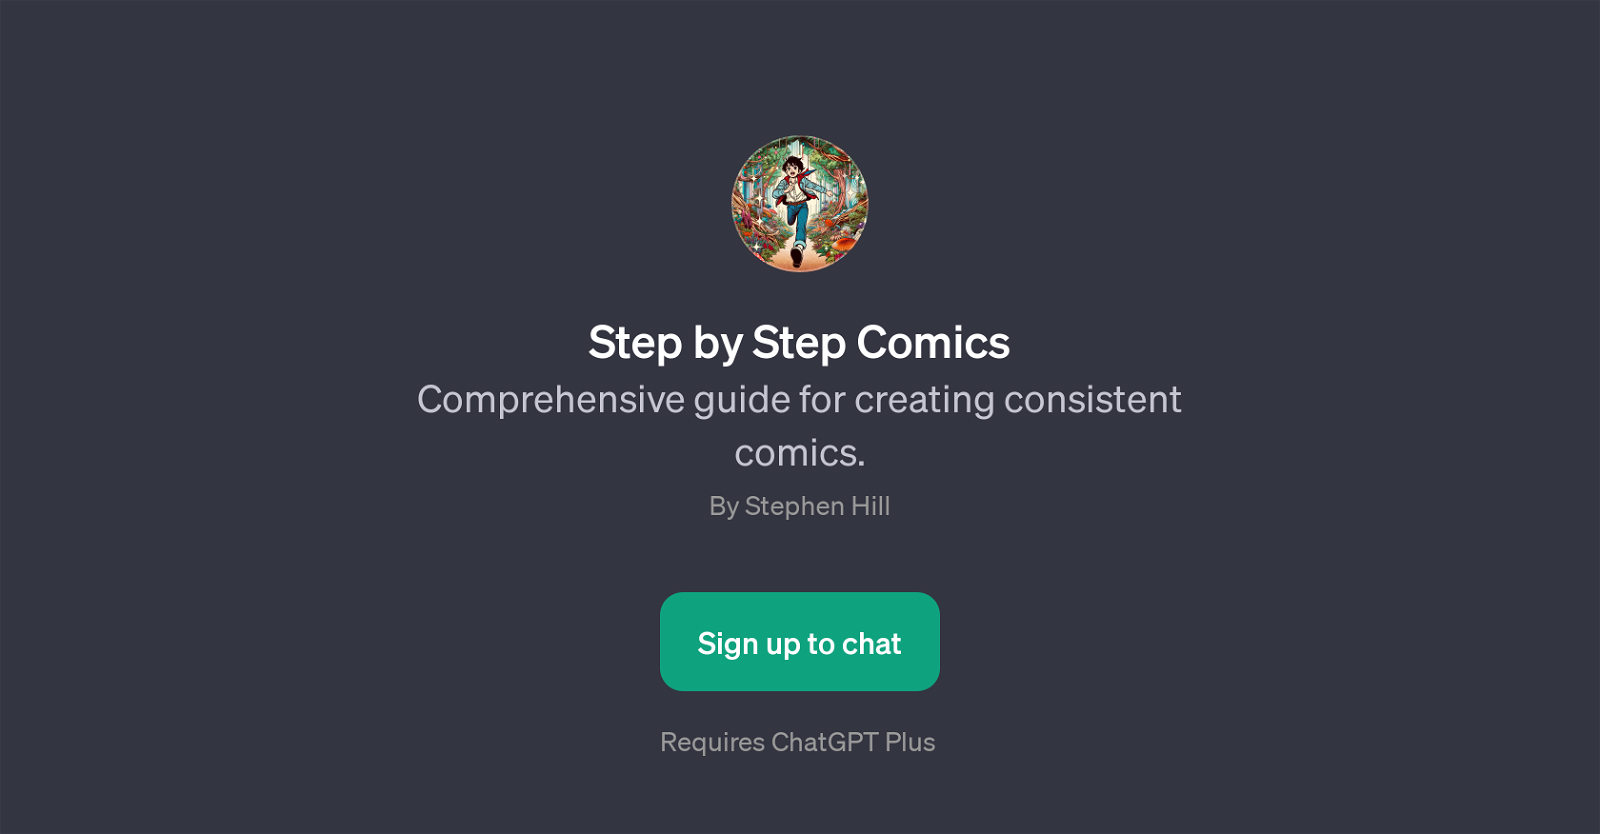 Step by Step Comics website